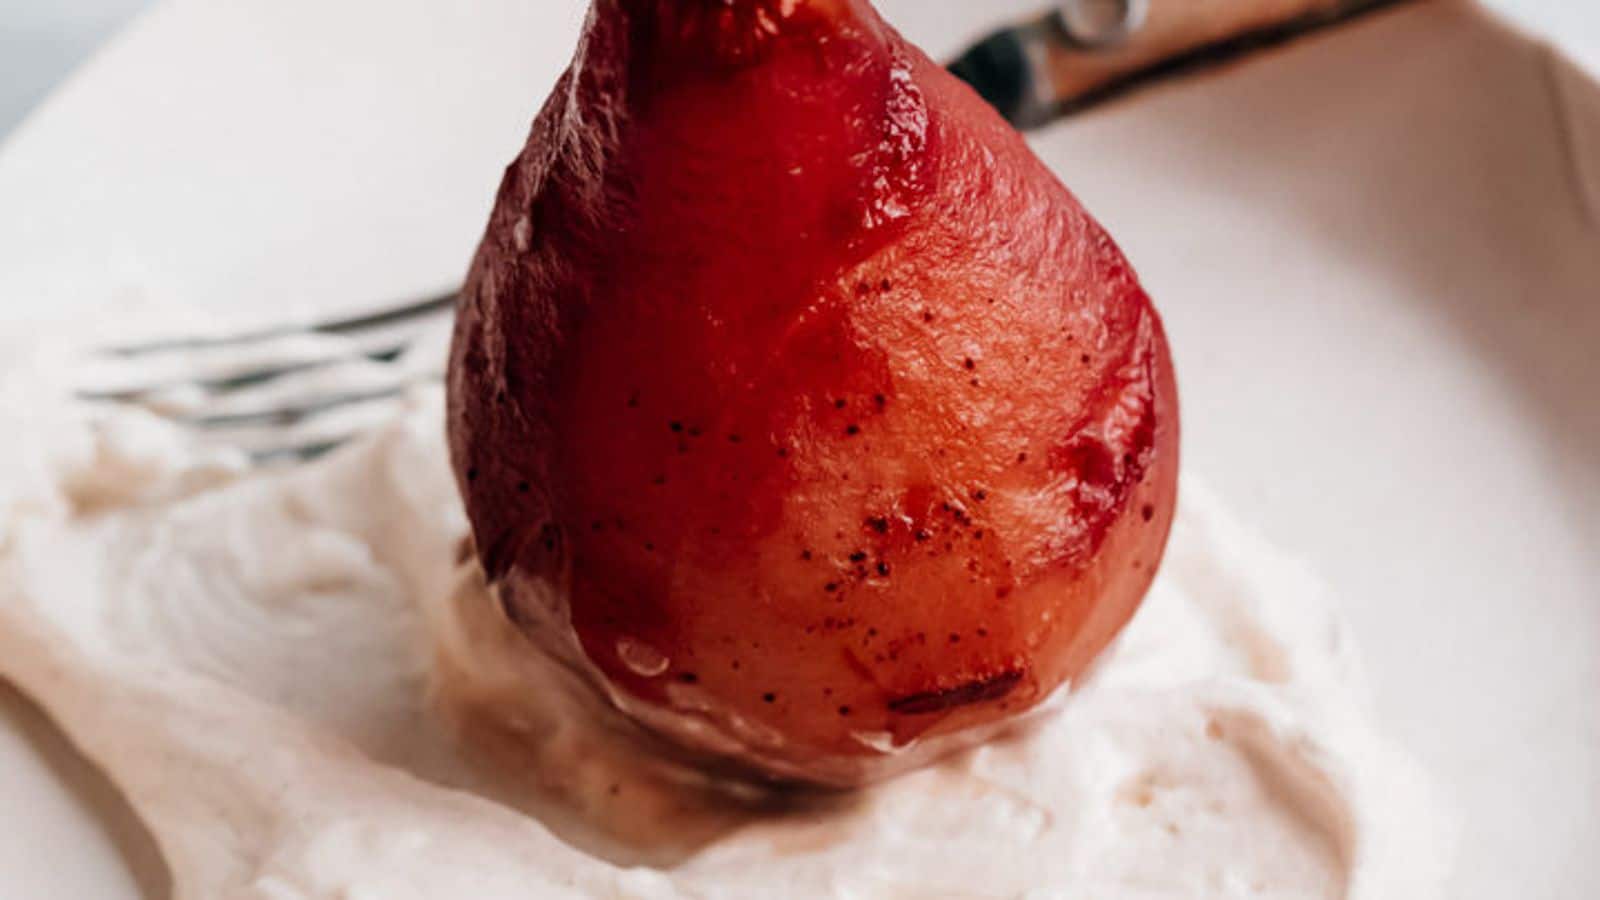 Pomegranate vegan desserts for a guilt-free indulgence